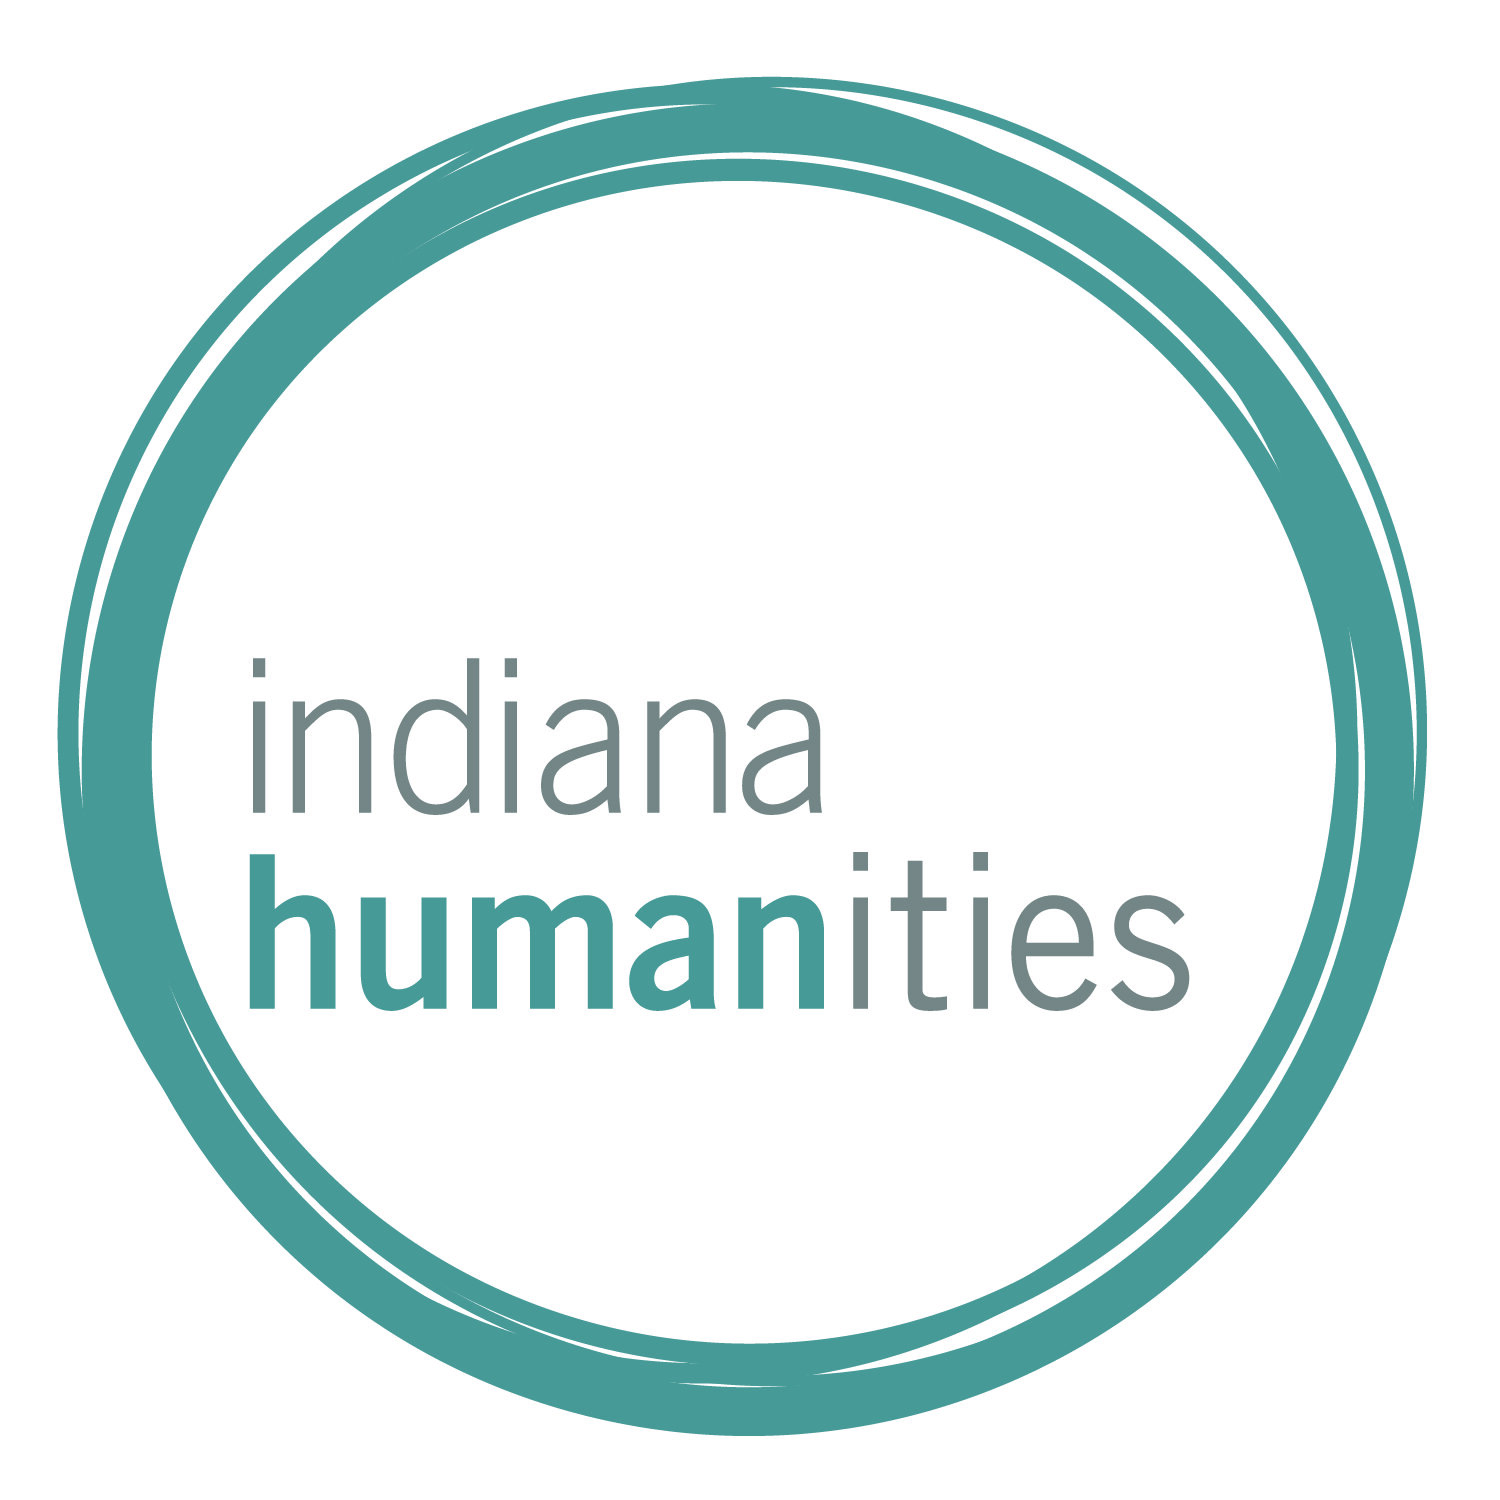 Indiana_Humanities_HighRes.jpg